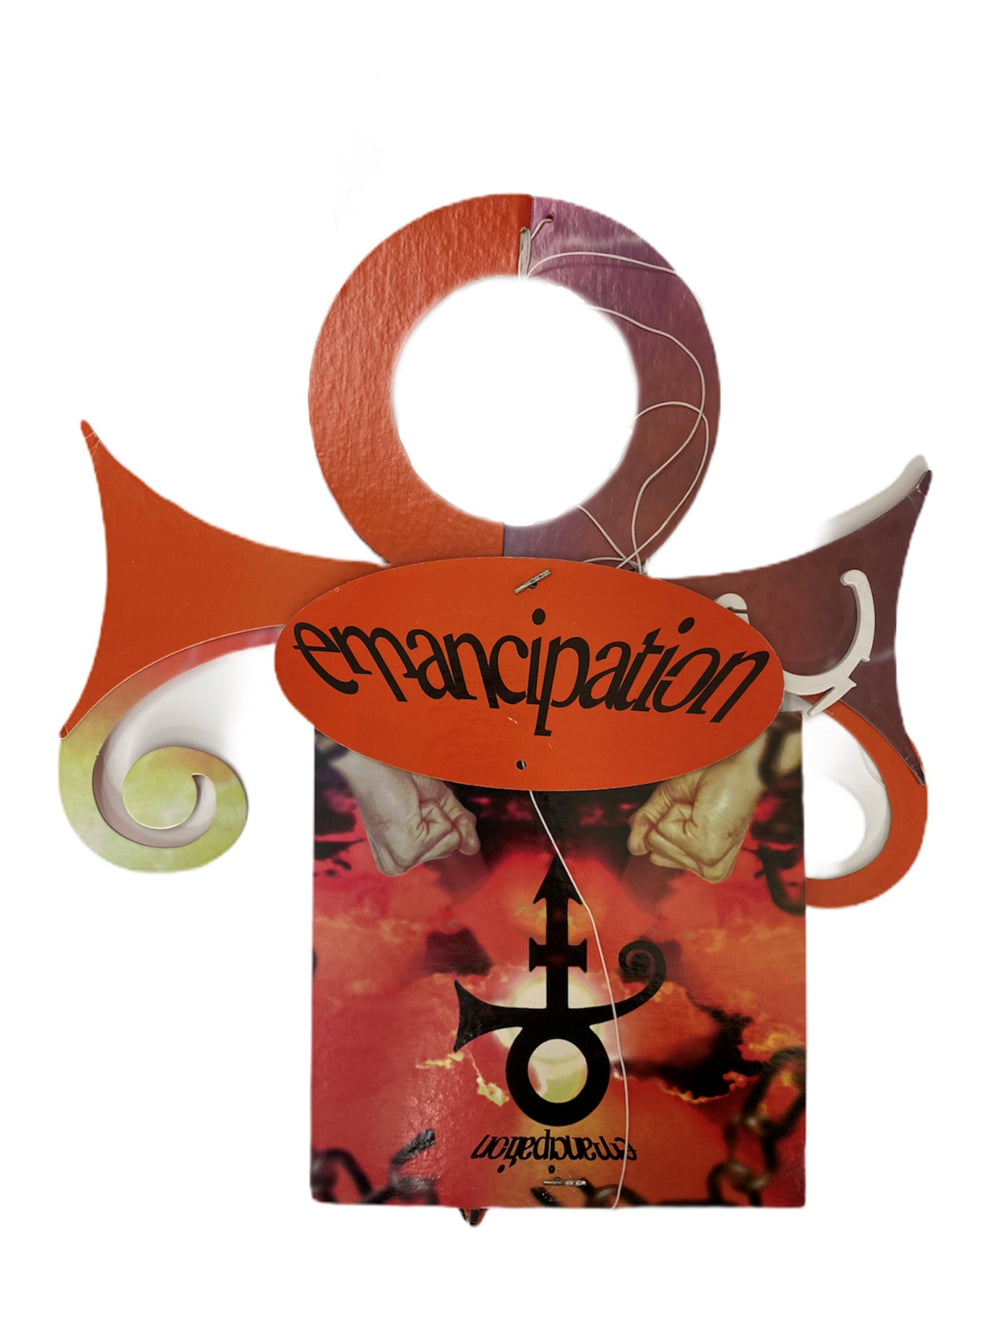 Prince Emancipation Promotional Mobile Love Symbol Hanging Display AS NEW